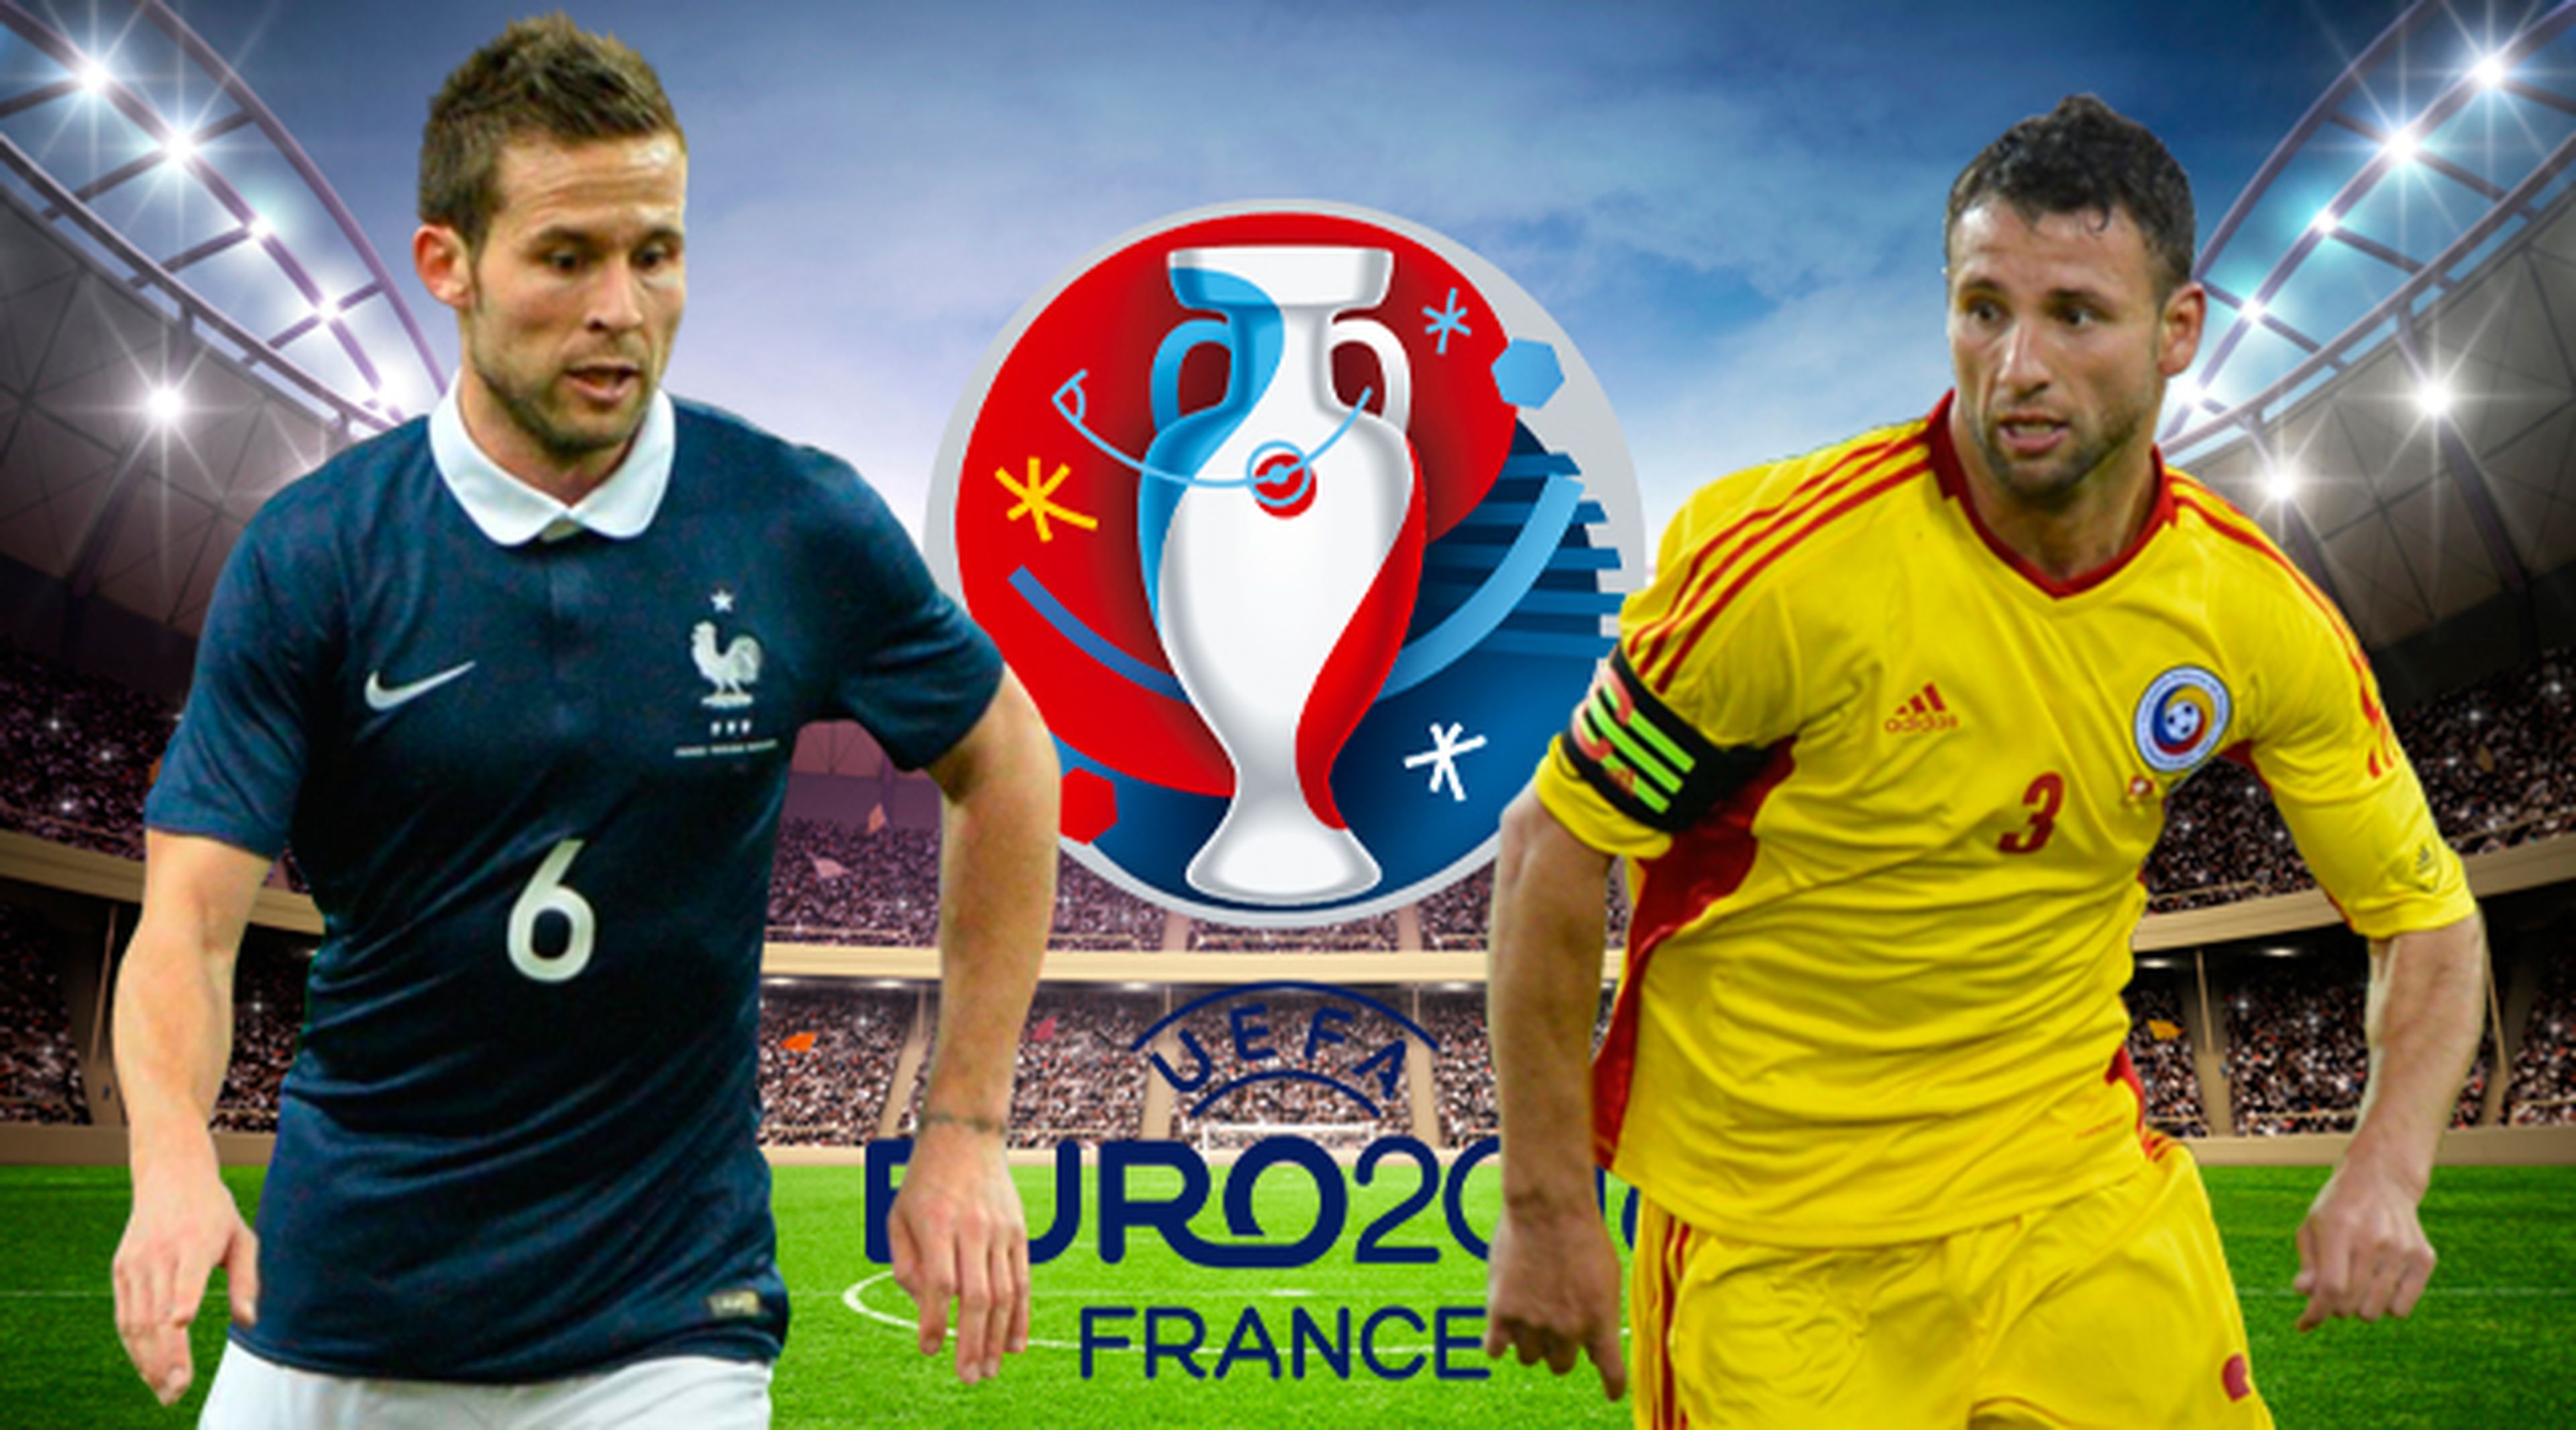 ver francia rumania, ver online eurocopa, ver euro 2016, francia rumania online, como ver francia rumania